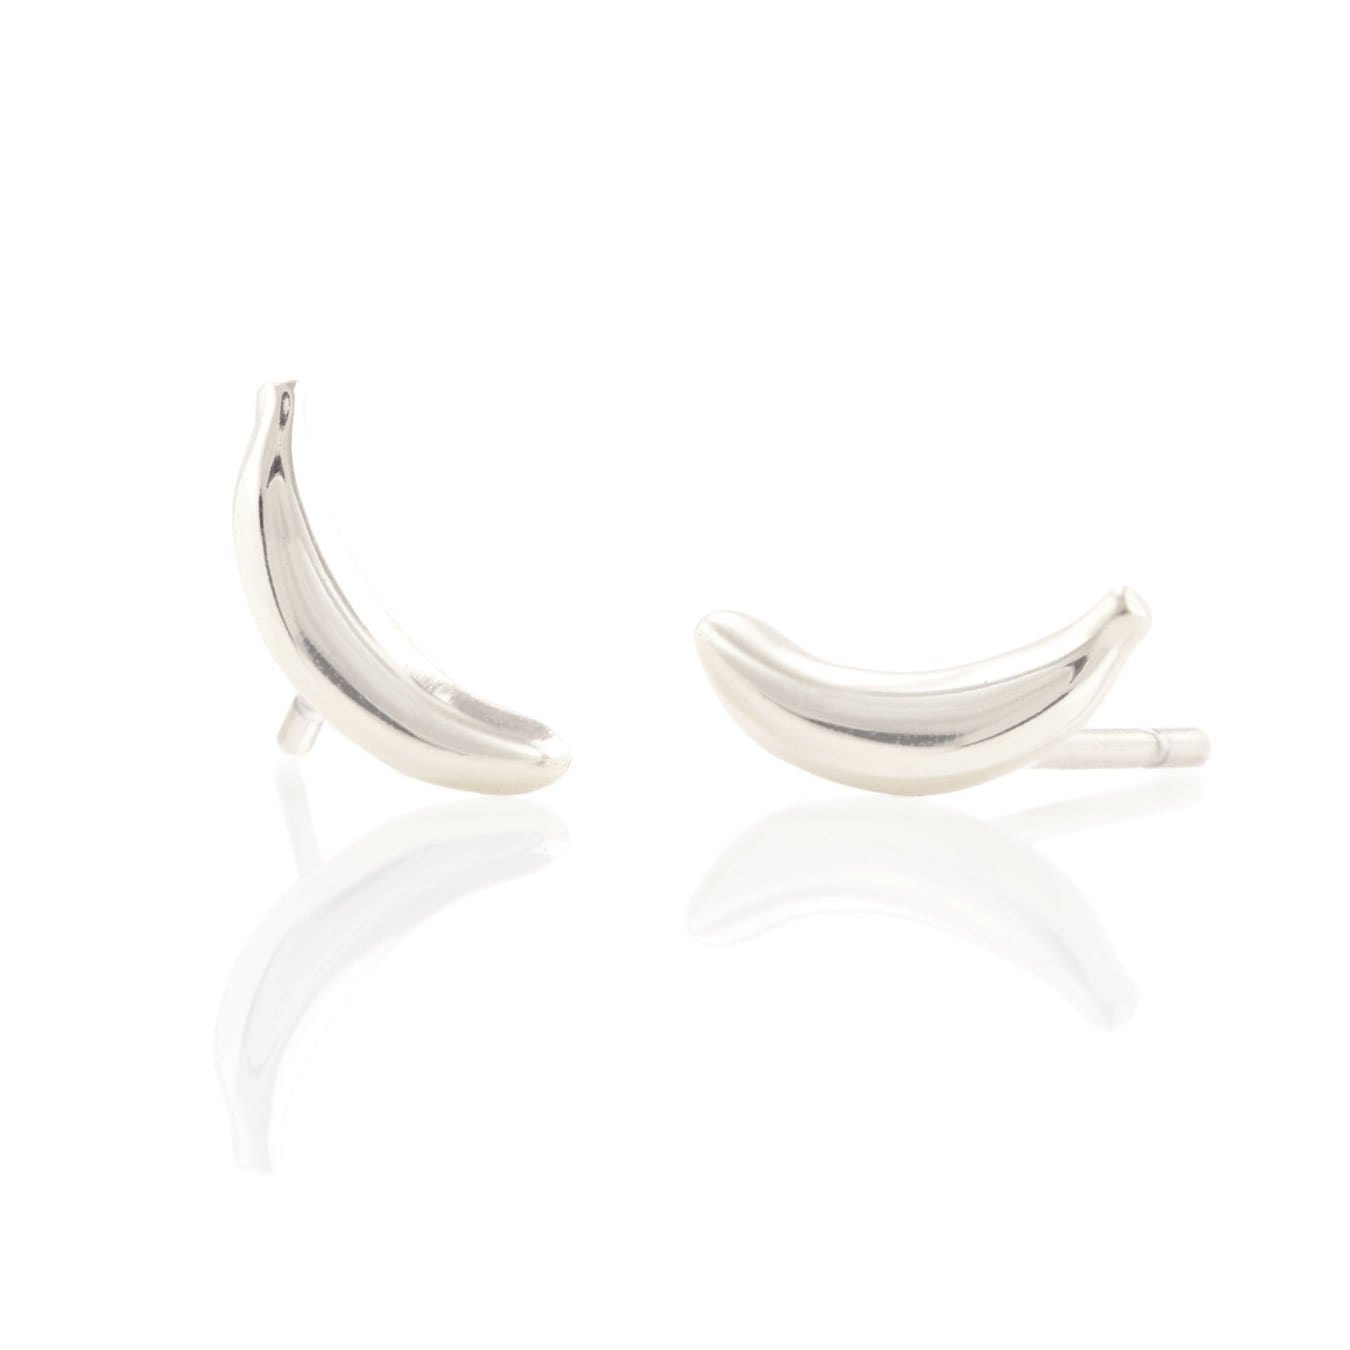 Banana Stud Earrings Sterling Silver